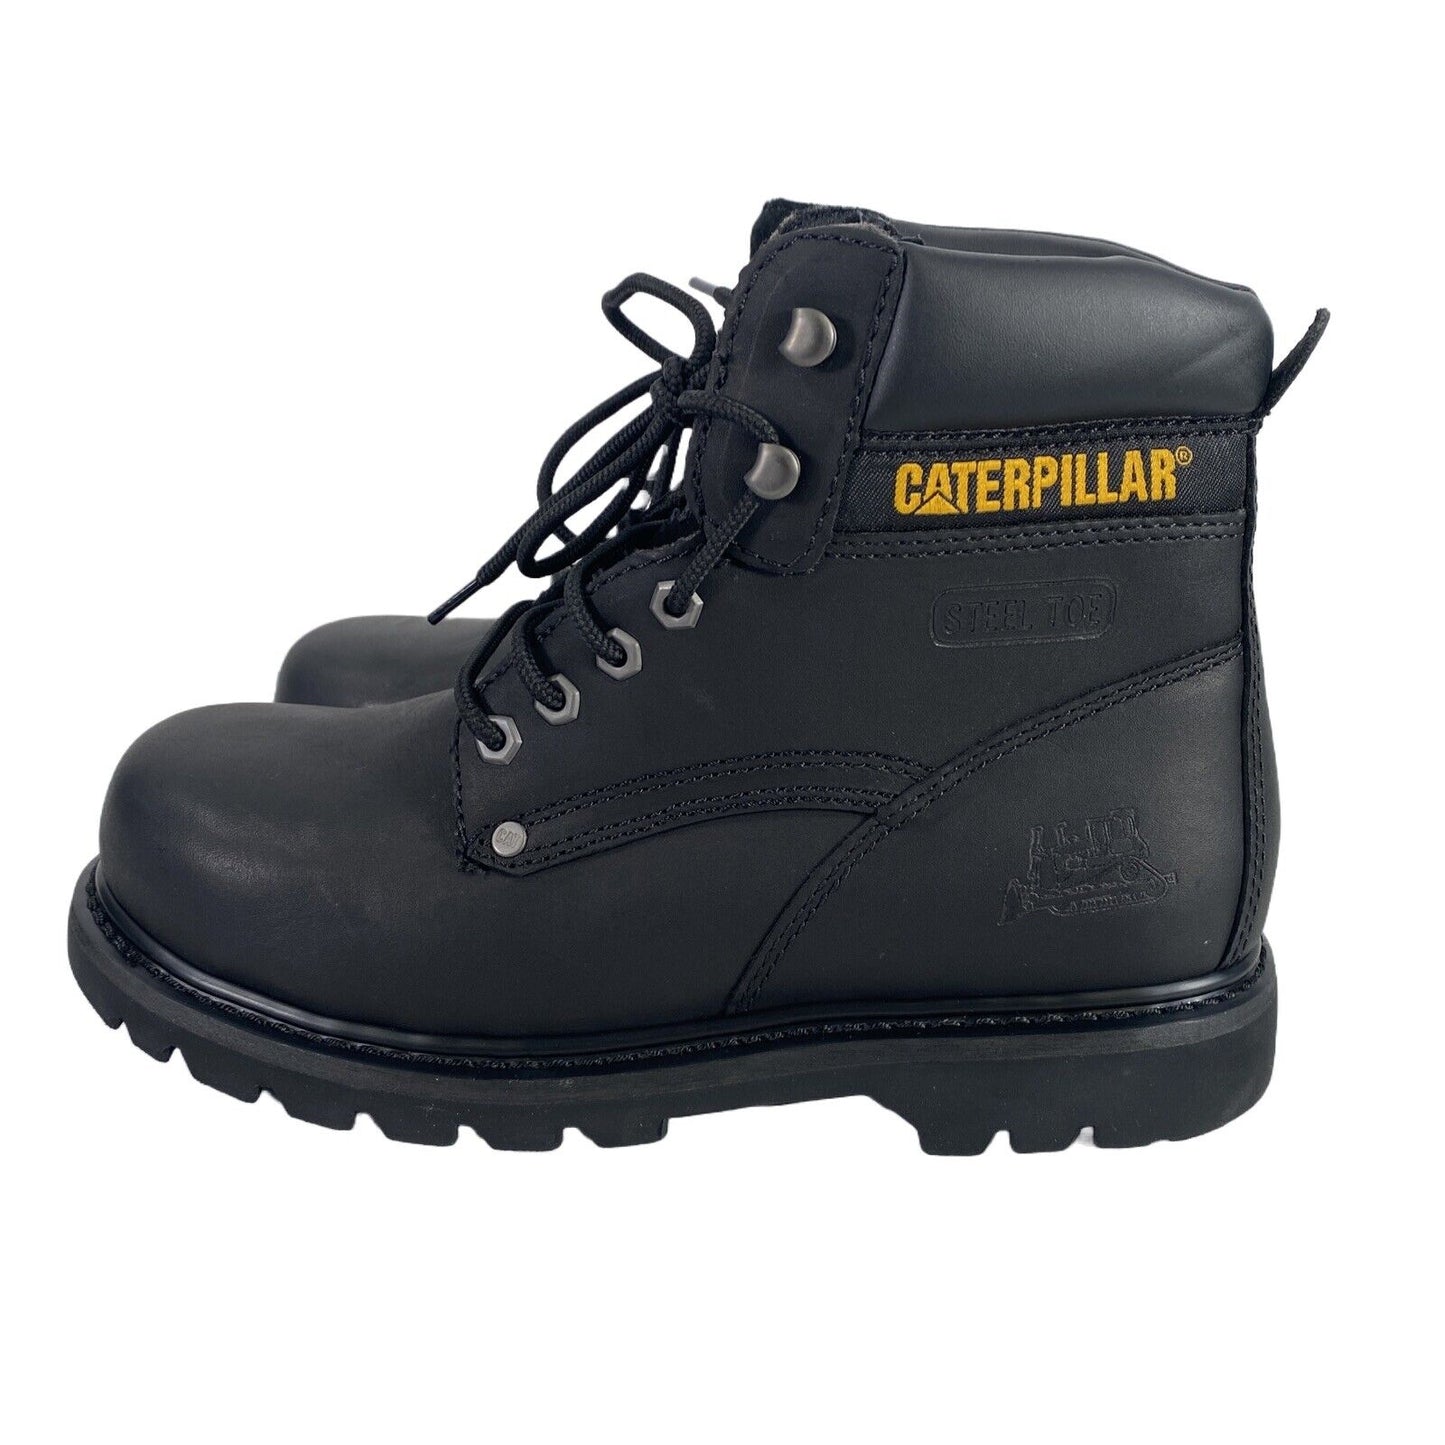 NEW Caterpillar Men's Black Leather Birmingham Steel Toe Work Boots - 9